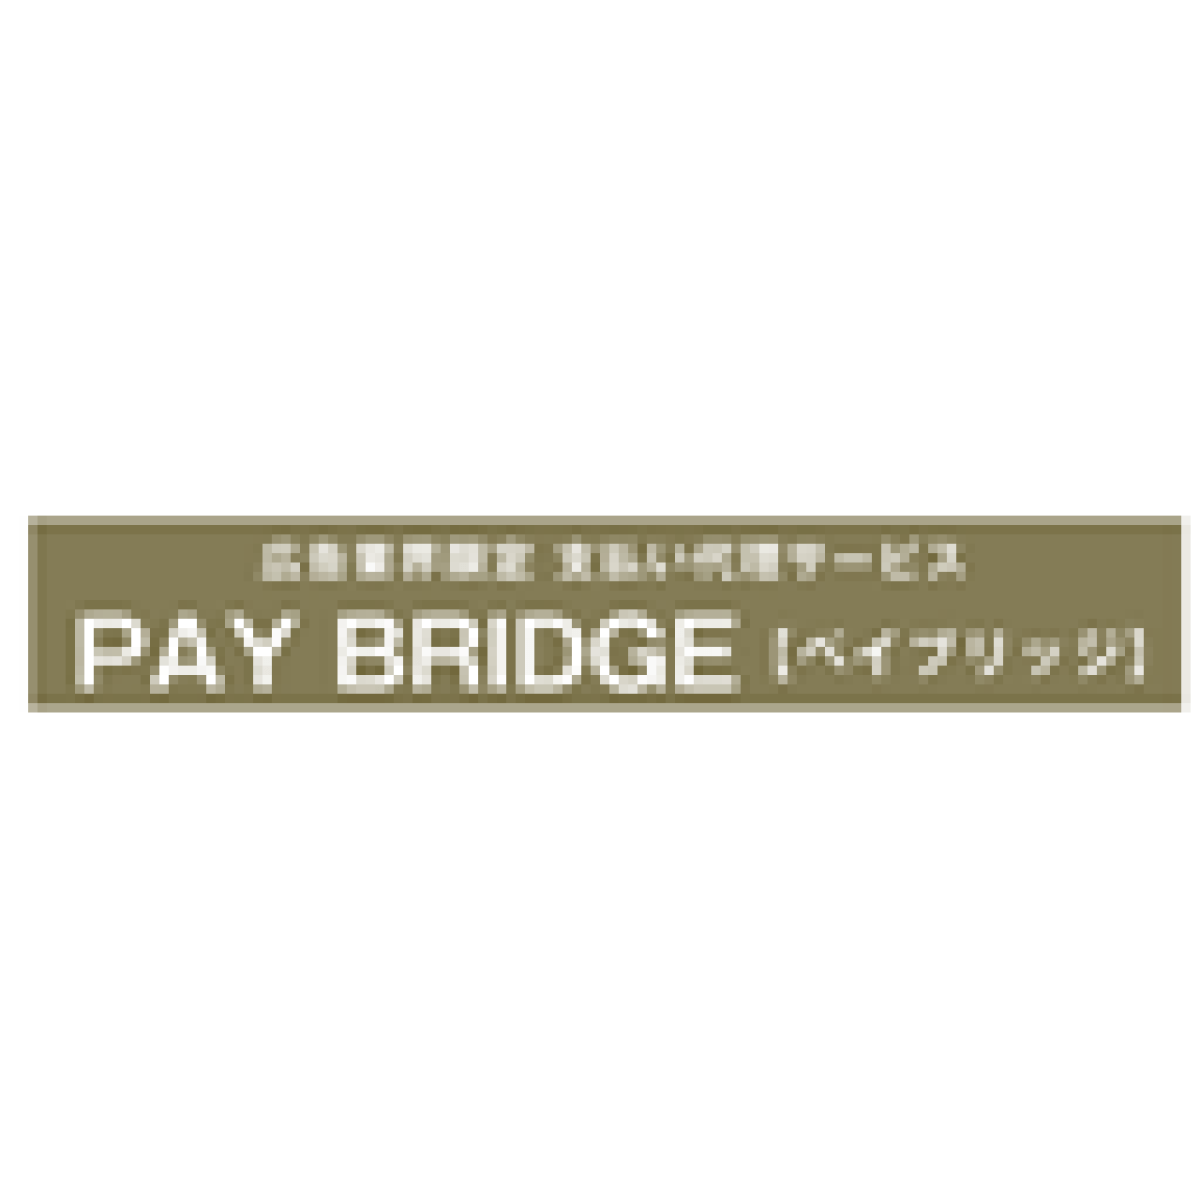 PAY BRIDGE